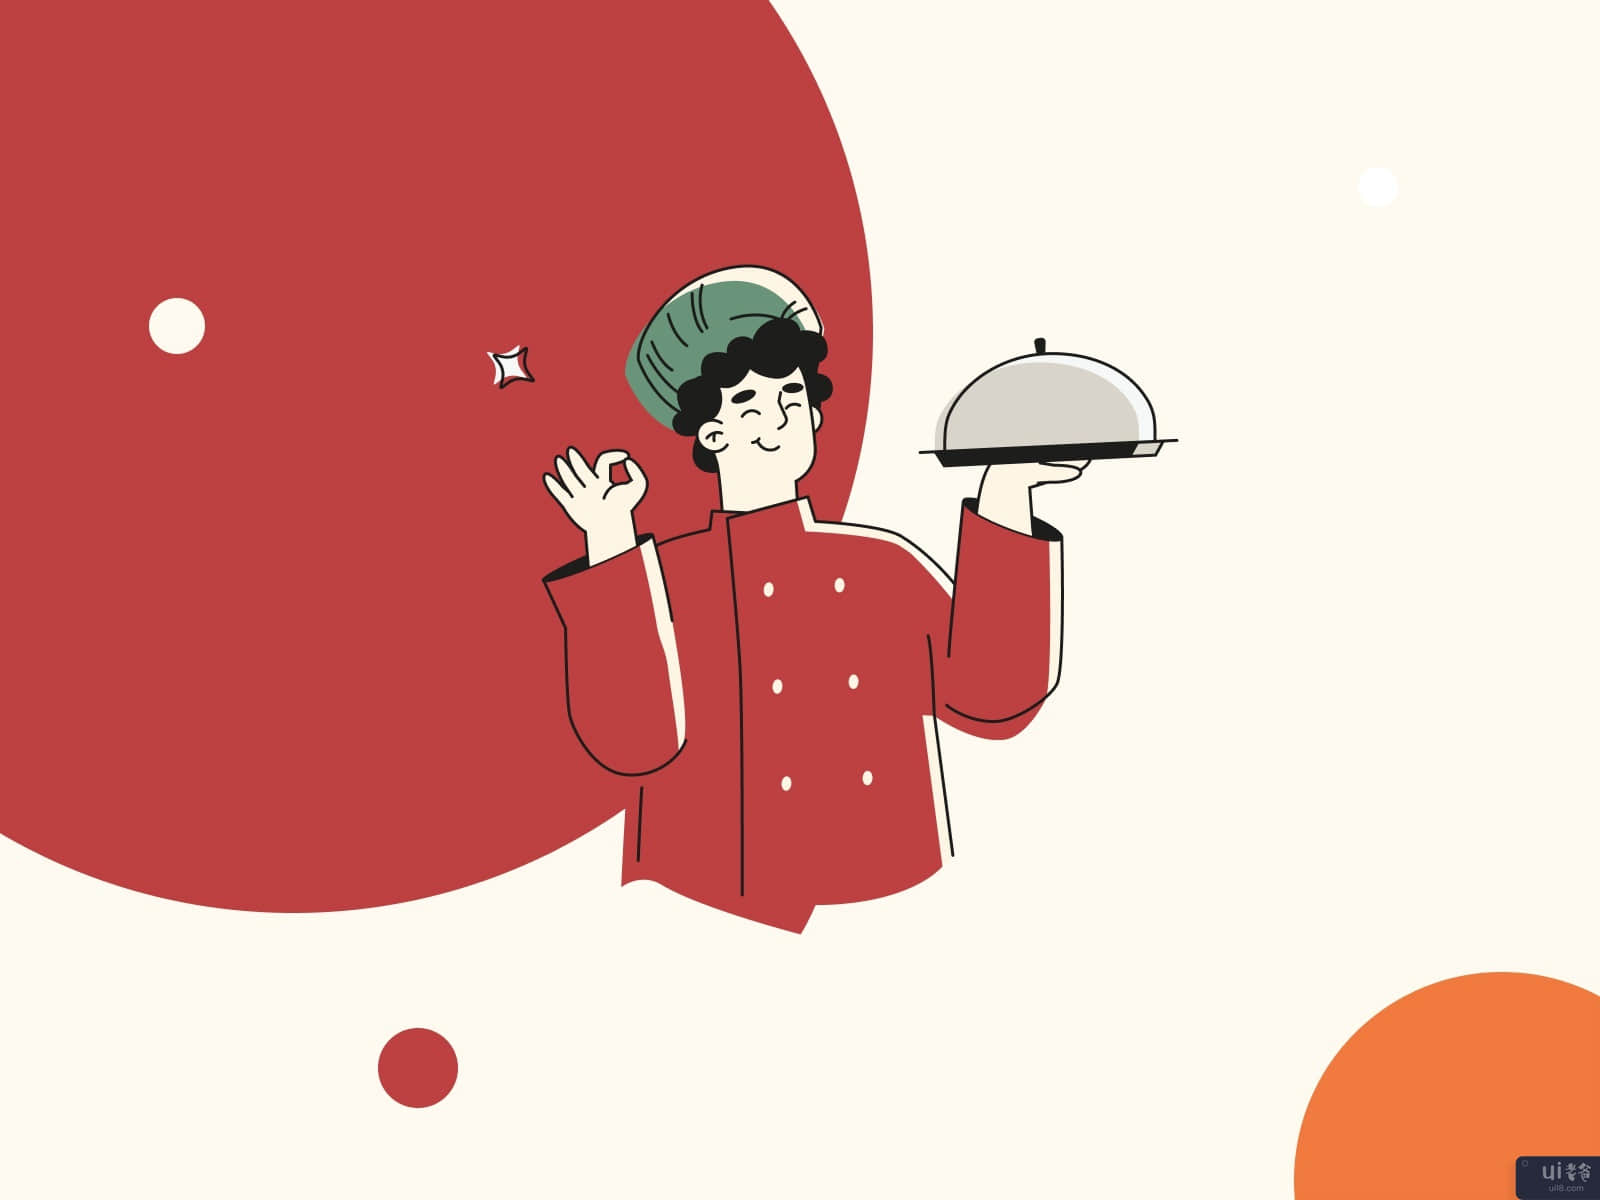 烹调者应用程序的互动(The cookfinder app interaction)插图6